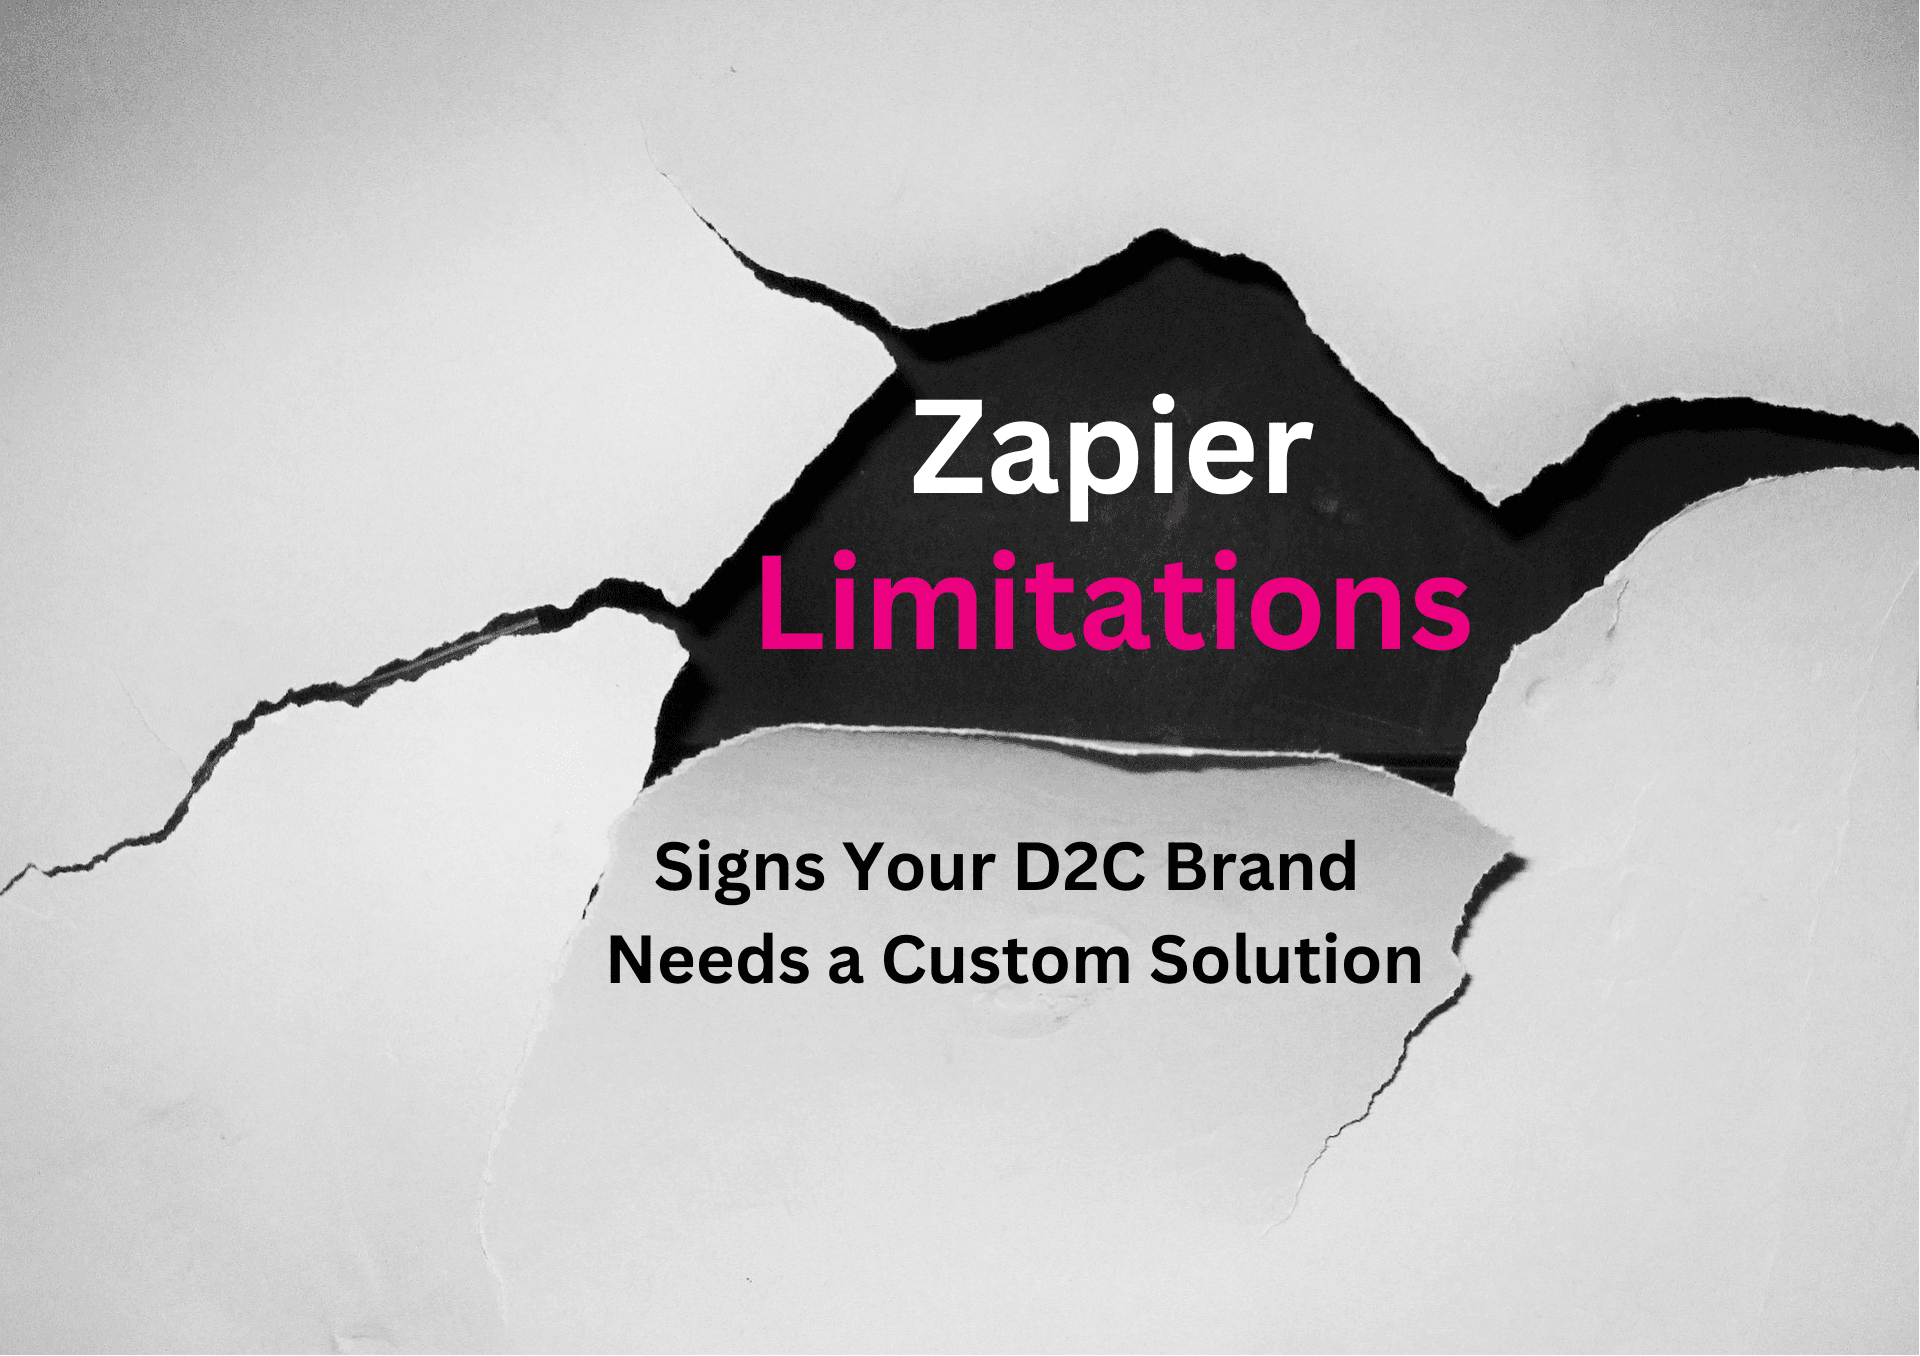 Zapier Limitations: Signs Your D2C Brand Needs a Custom Solution